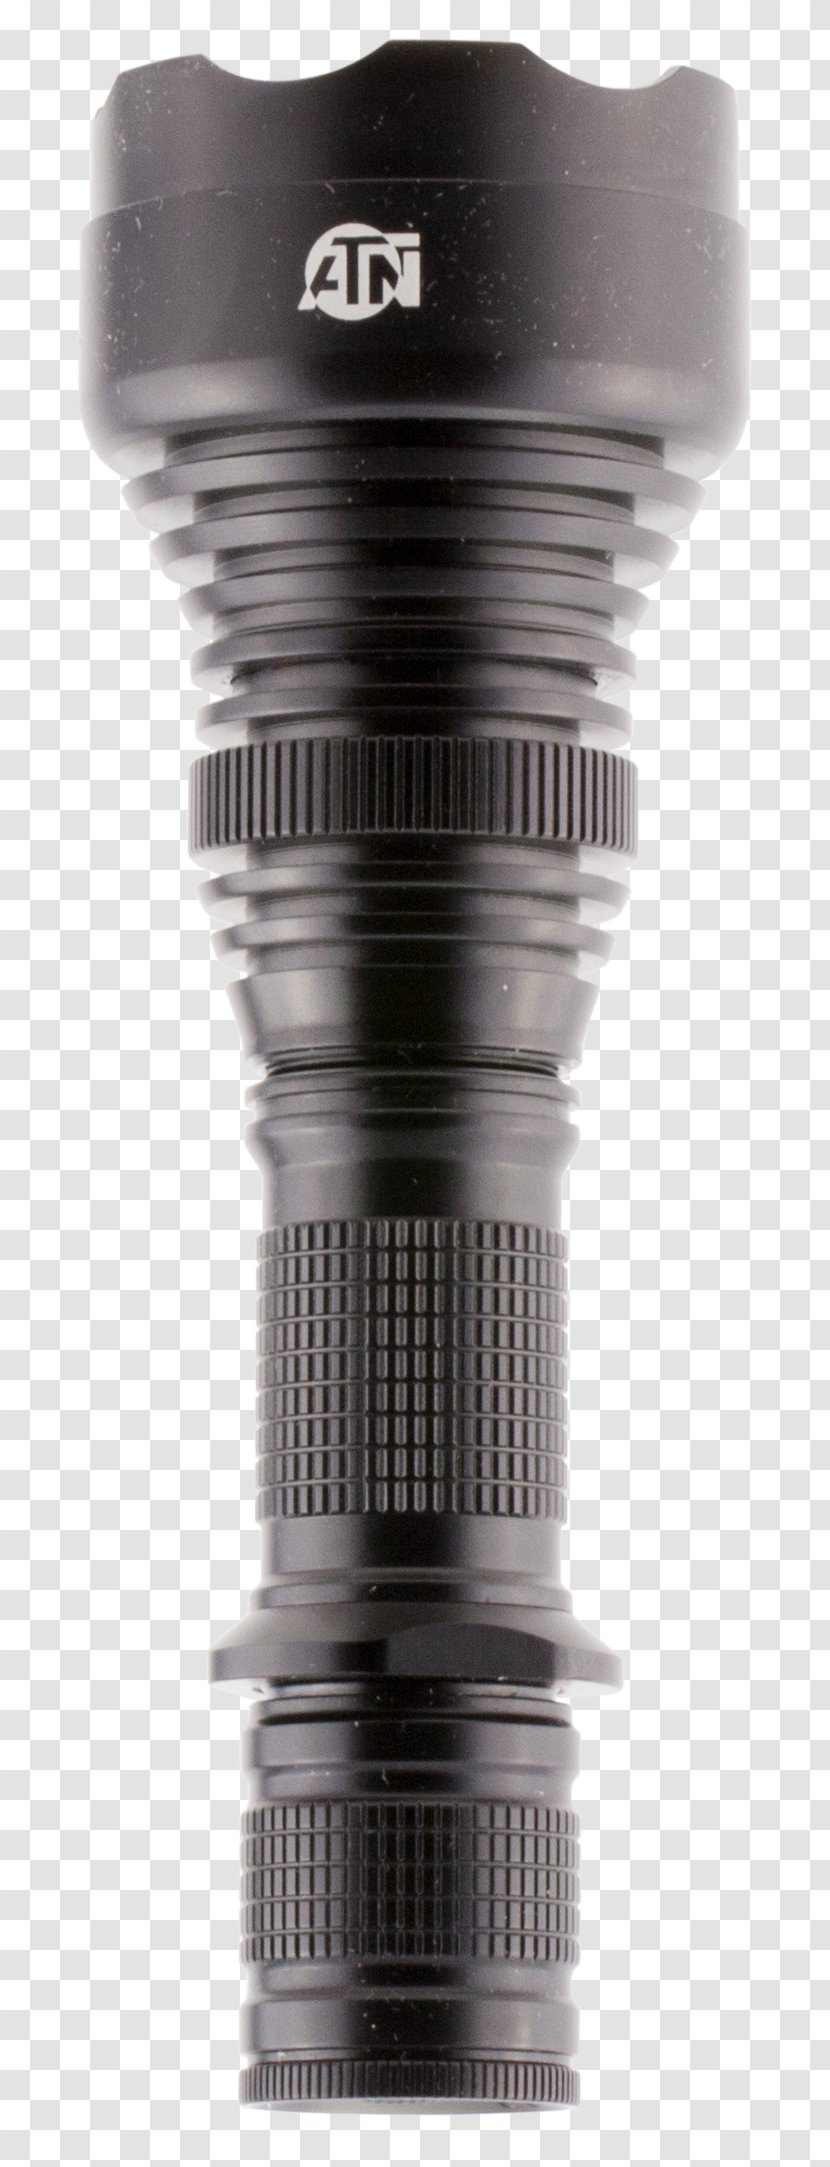 United States Camera Lens American Technologies Network Corporation Telescopic Sight Binoculars - Reticle - Long Range Transparent PNG